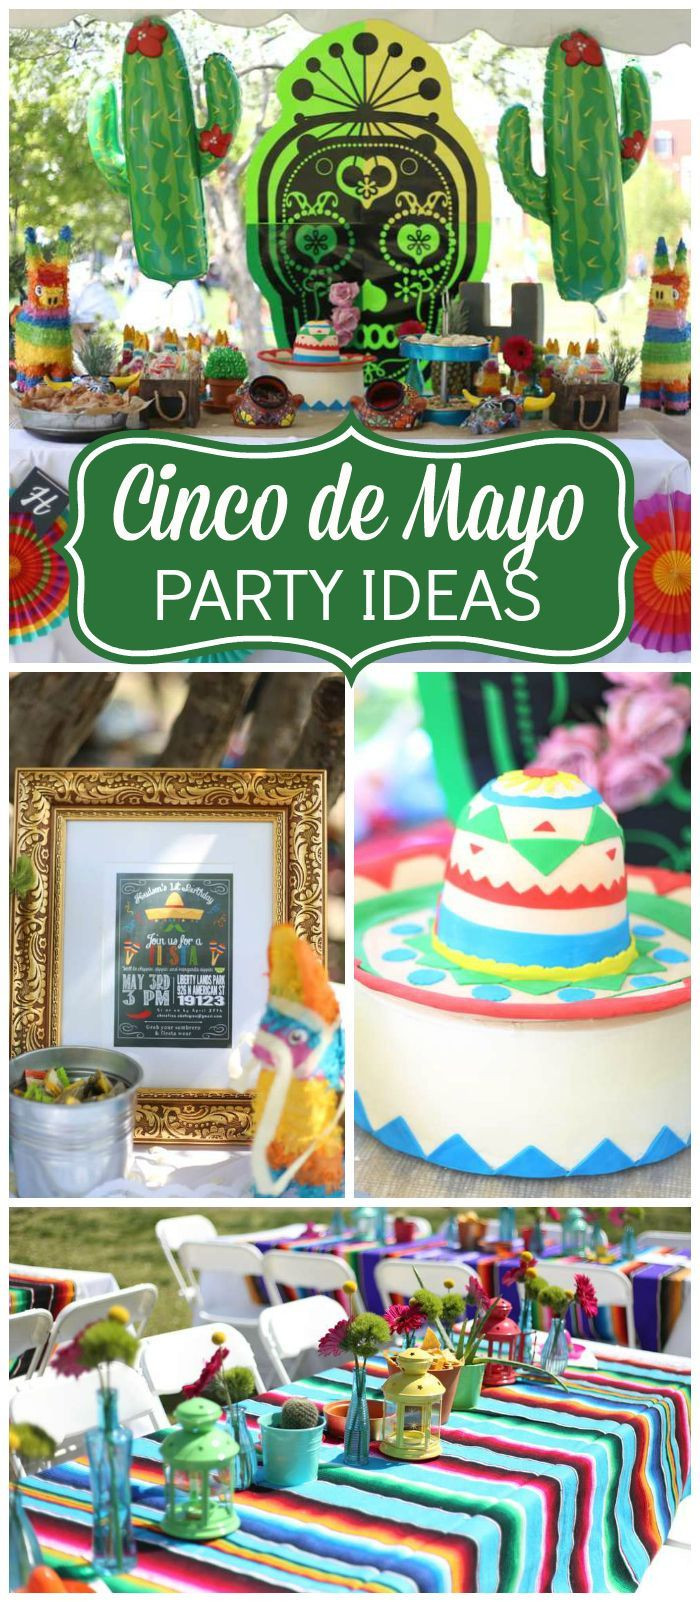 Cinco De Mayo Party Theme
 Check out this Cinco de Mayo party with a taco bar and